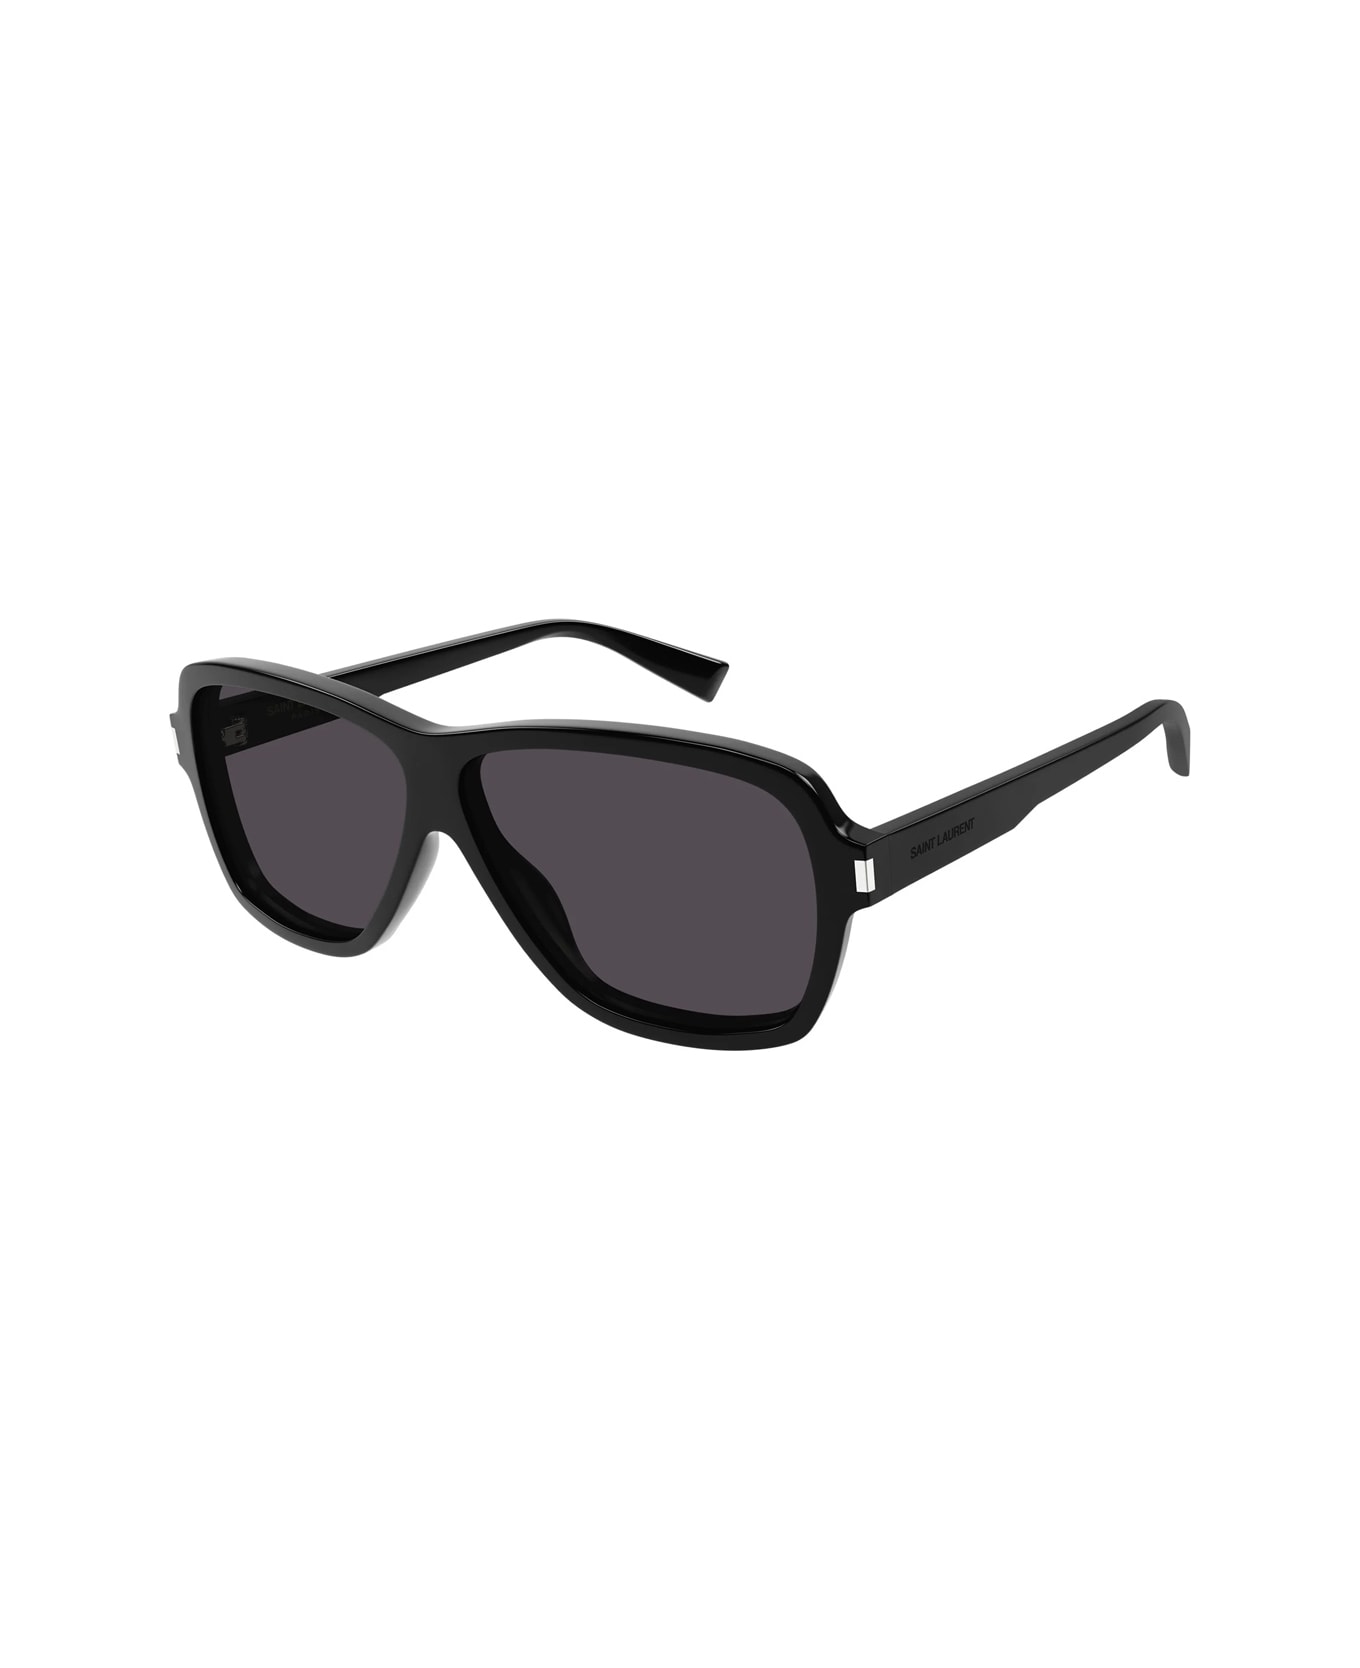 Saint Laurent Eyewear Sl 609 Carolyn 001 Sunglasses - Nero